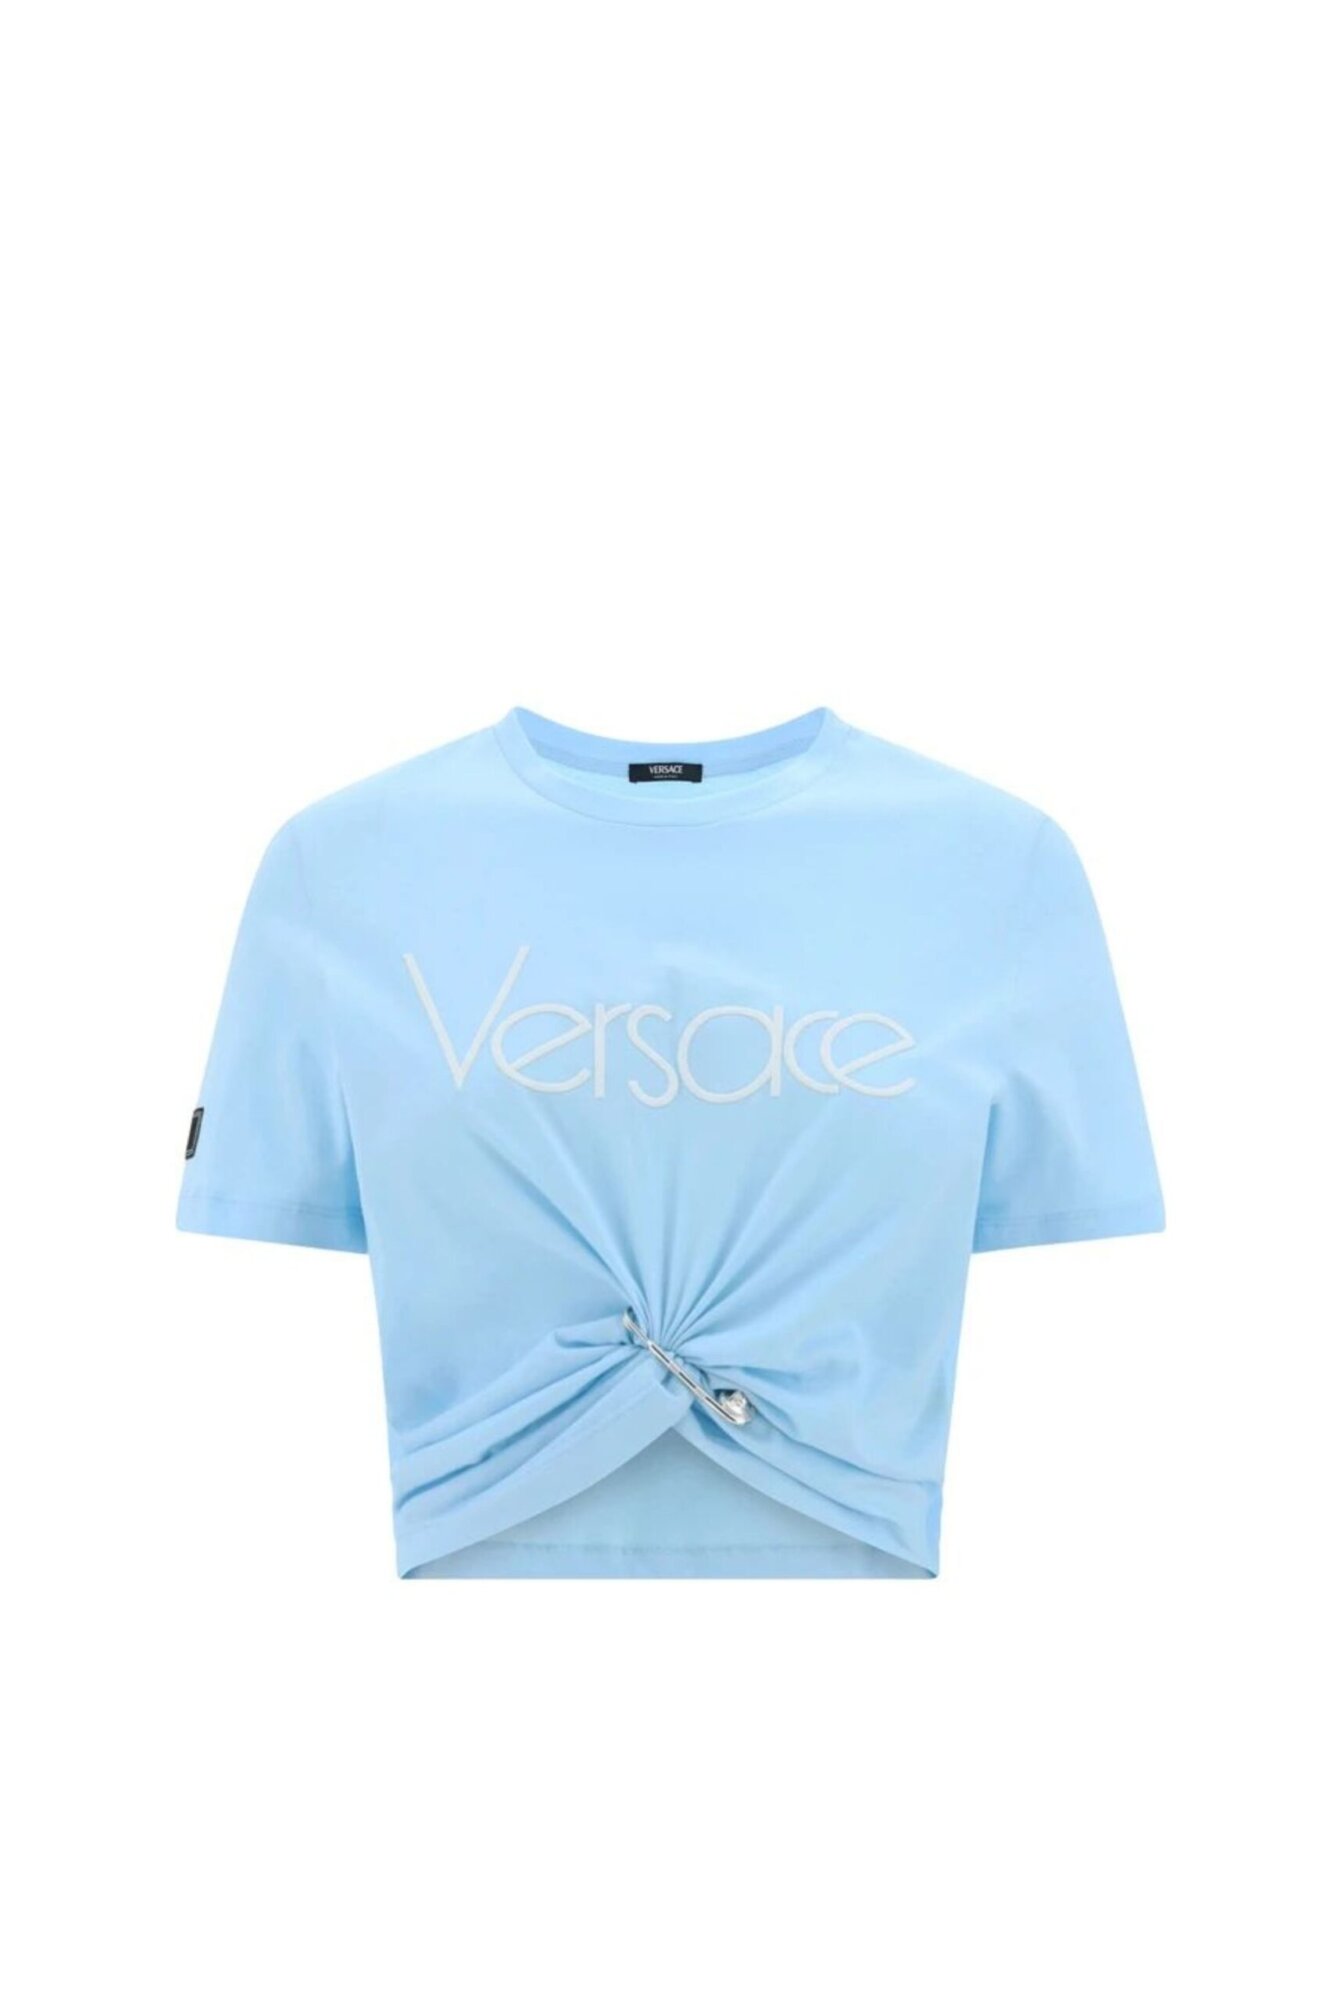 -35% Versace T shirt corta 1978 con logo